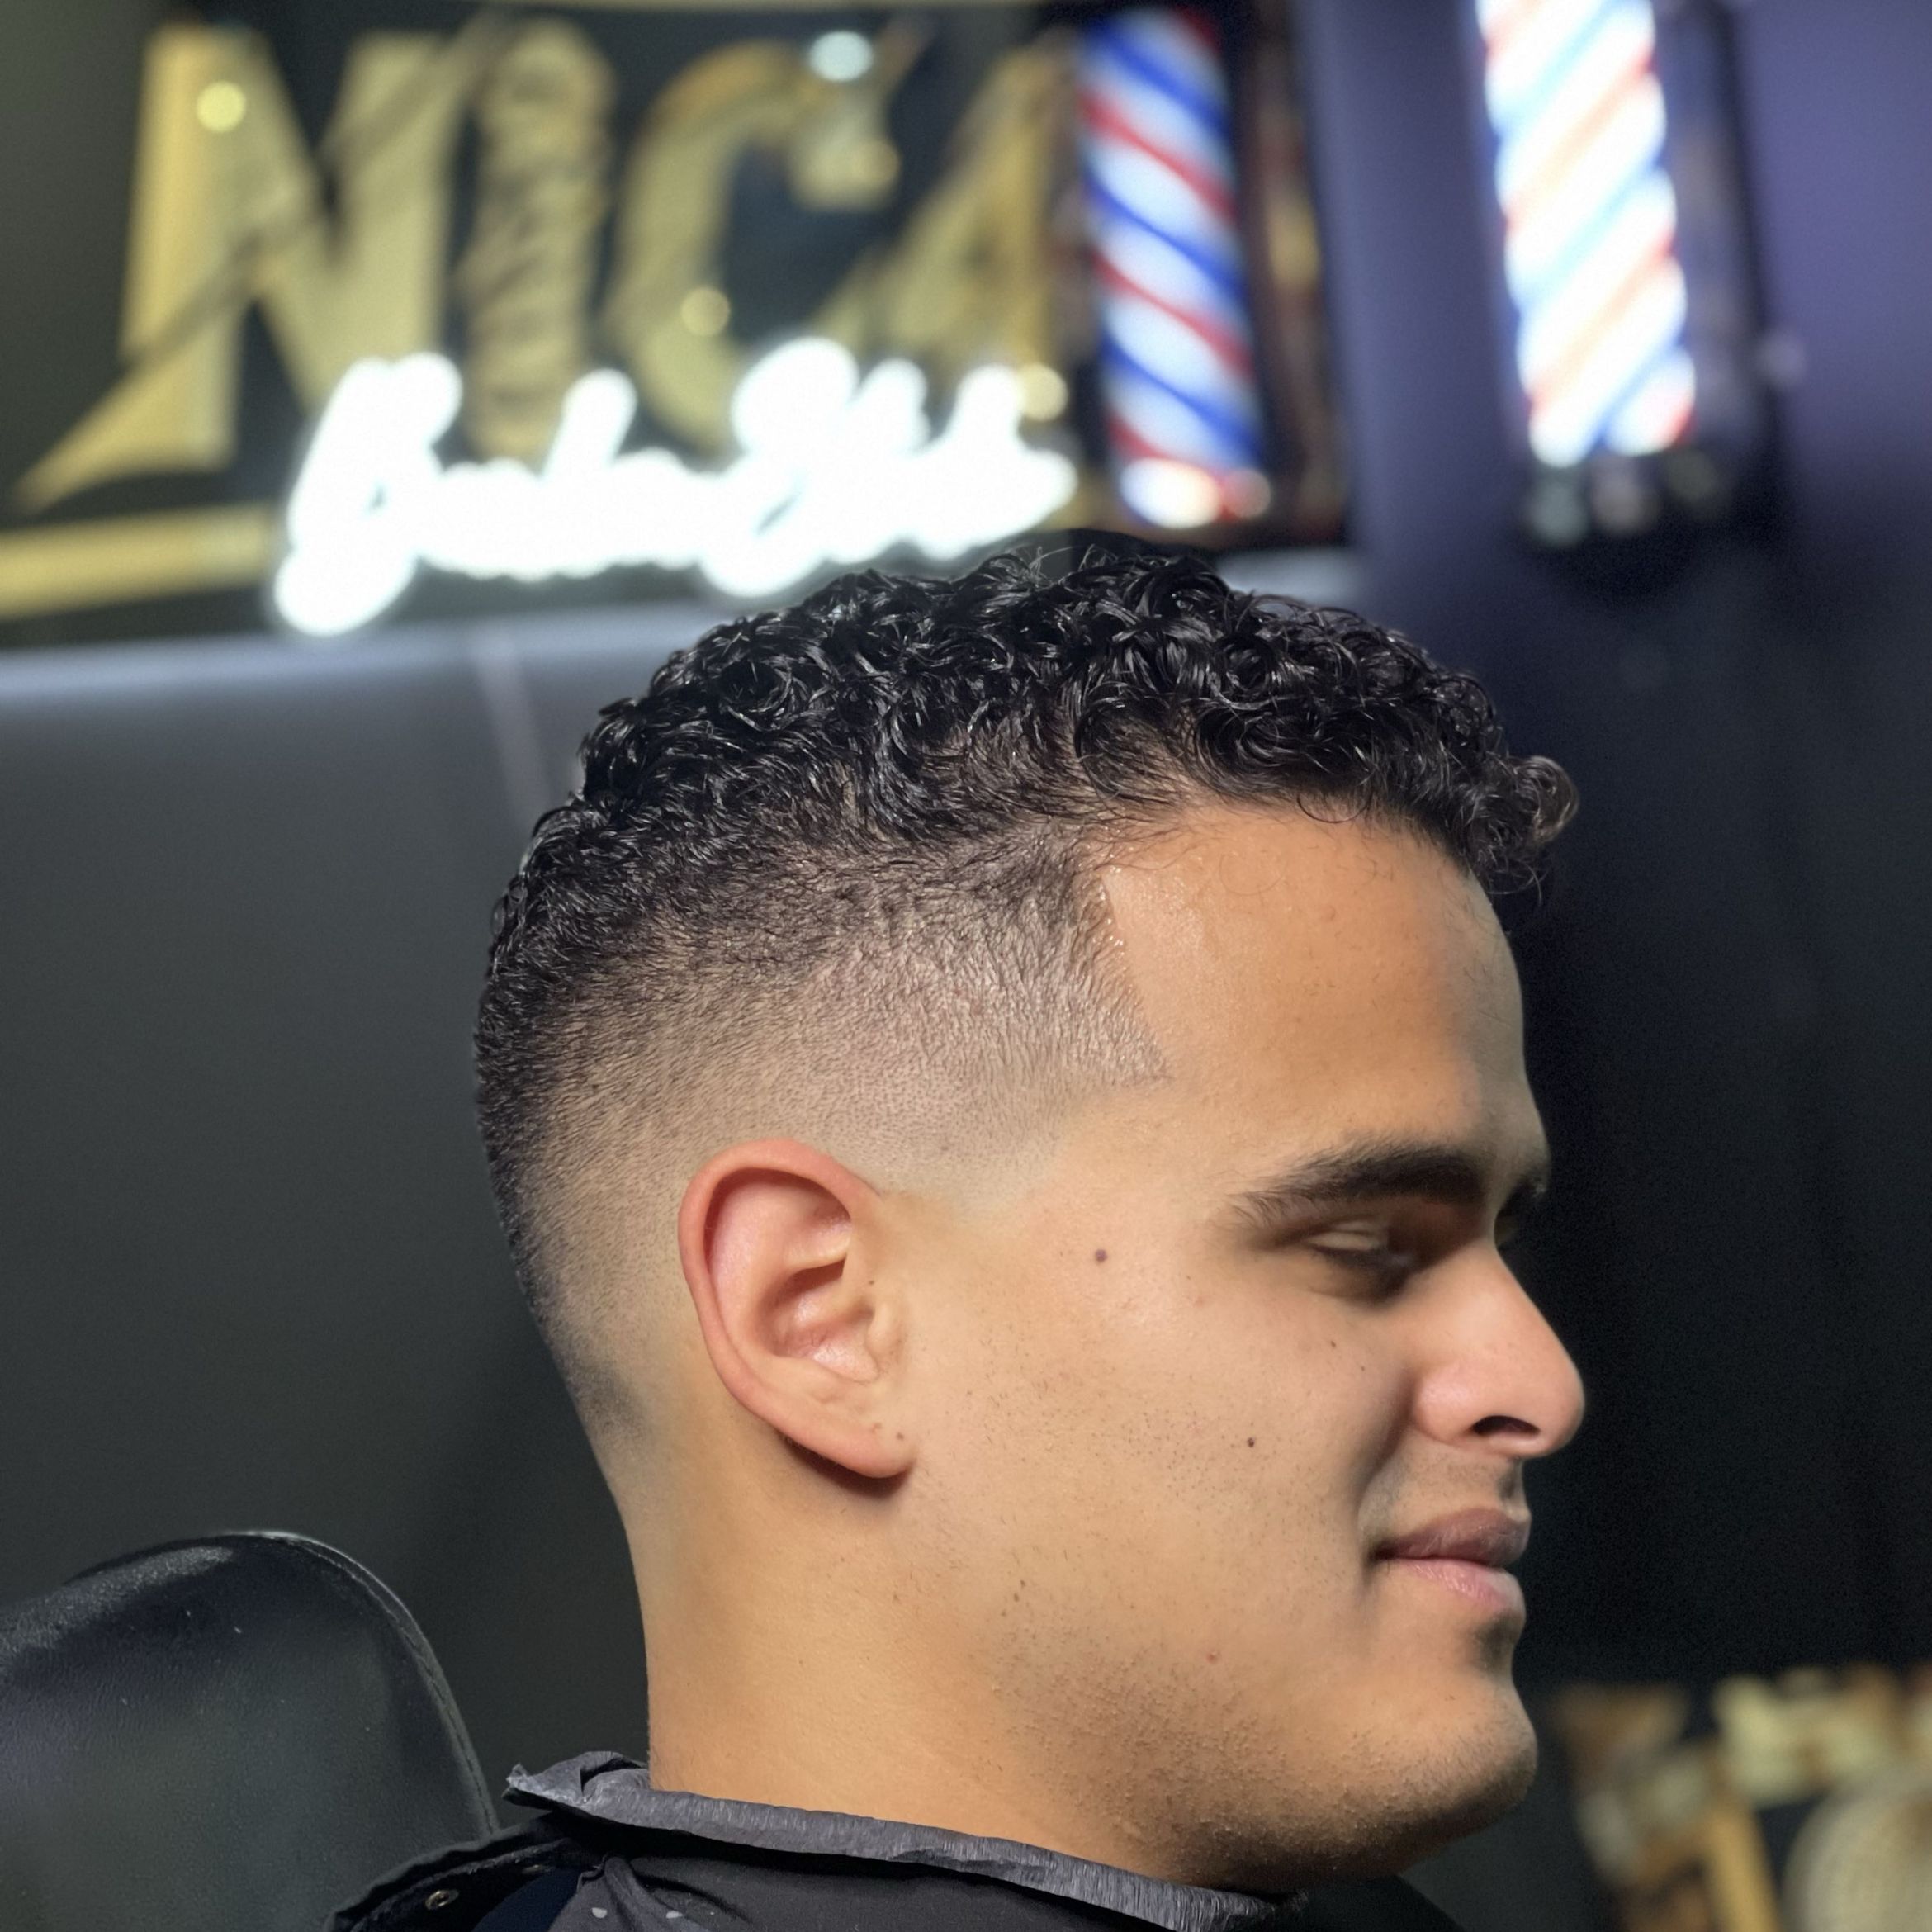 The N1C4 Haircut Experience portfolio